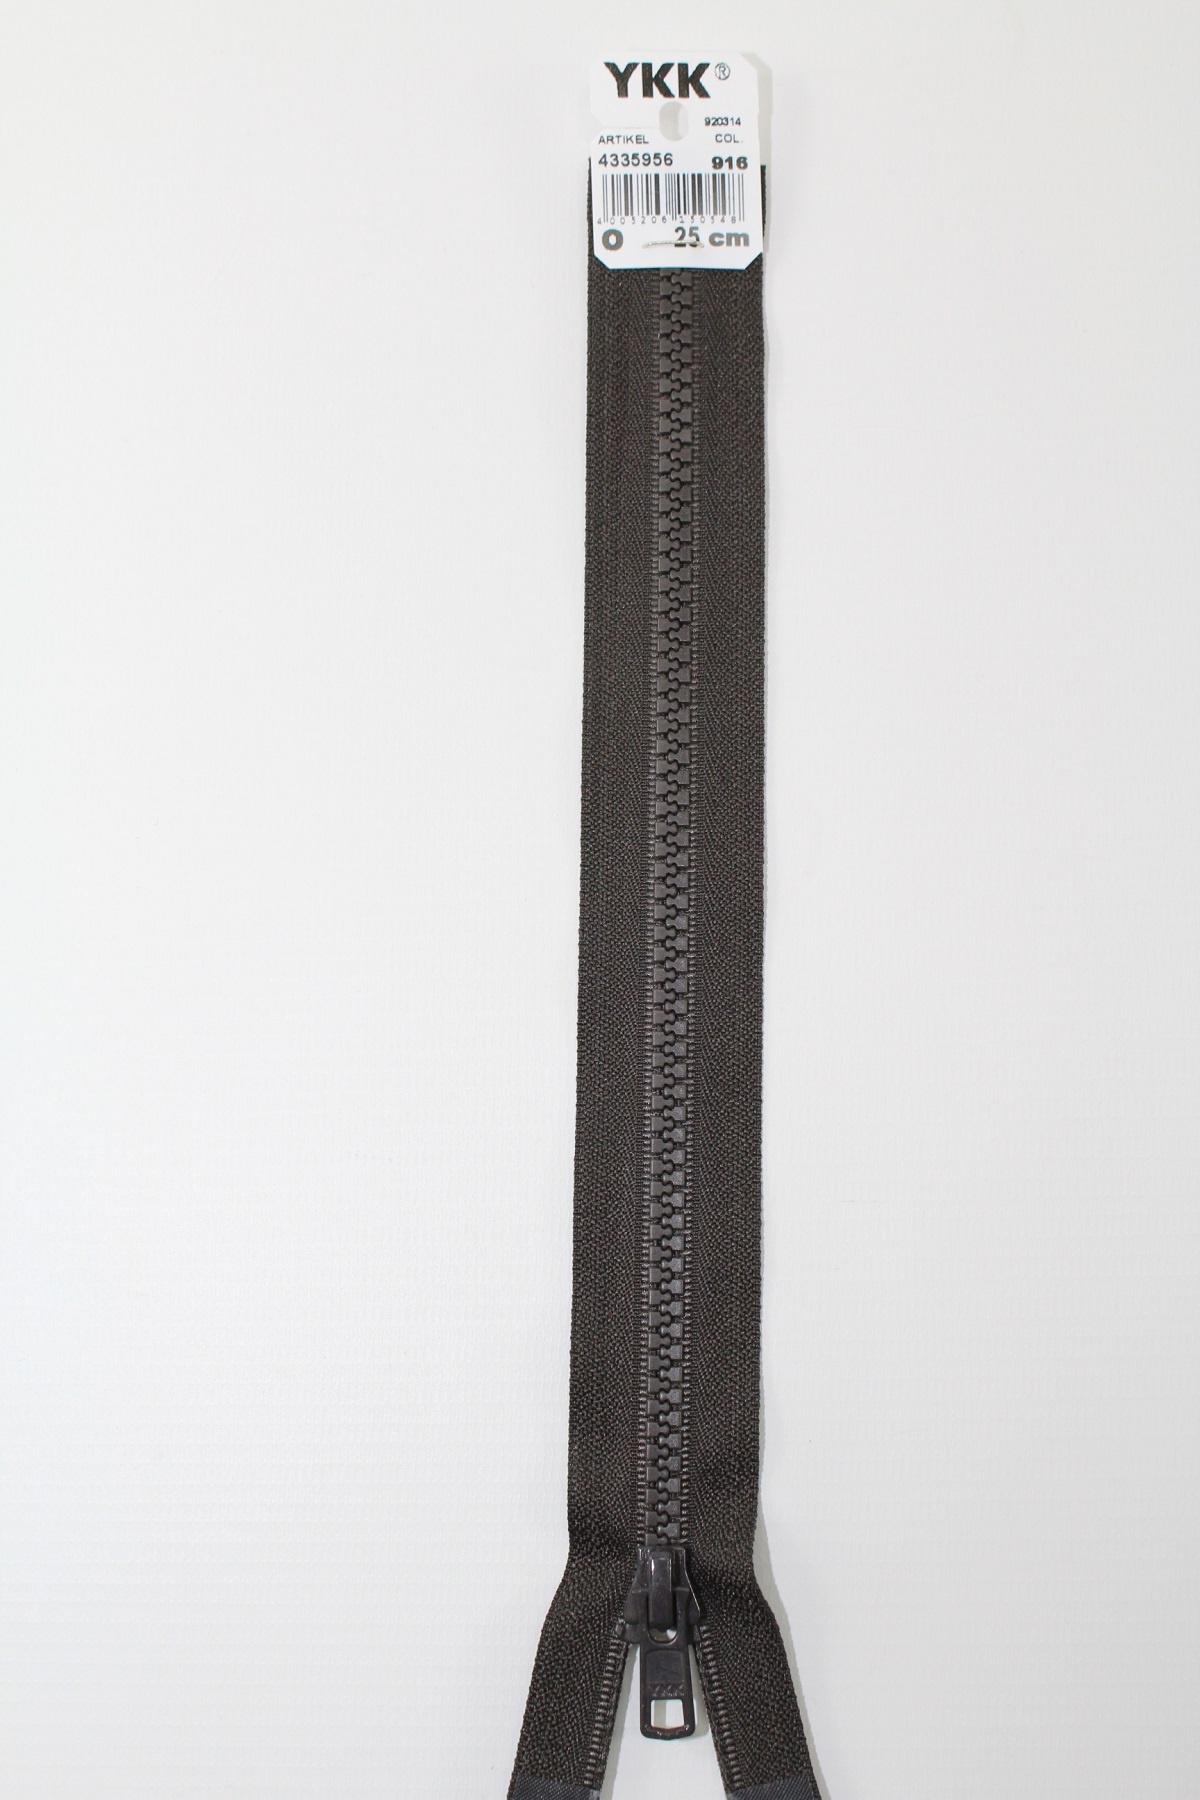 YKK - Reissverschlüsse 25 cm - 80 cm, teilbar, schwarzbraun